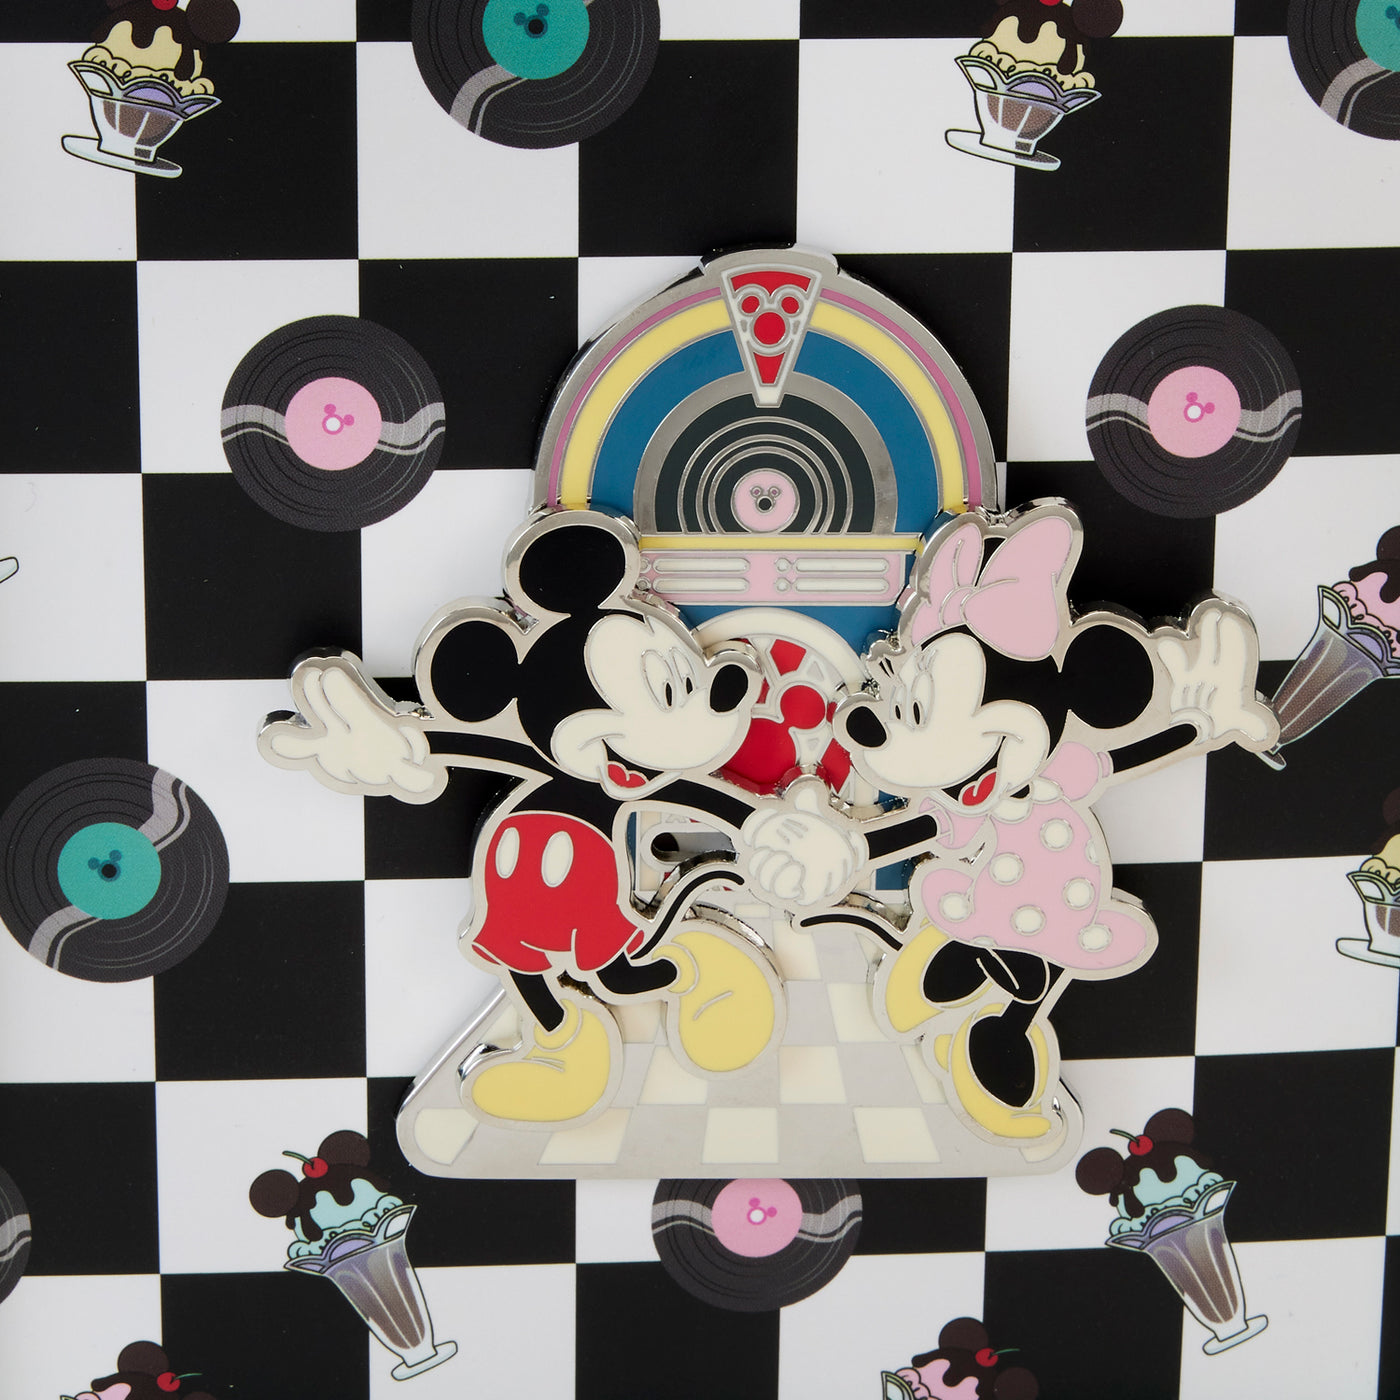 Decdc20 - Disney: Mickey Mouse - Decoration 20 - Minnie Mouse 7cm Gadget